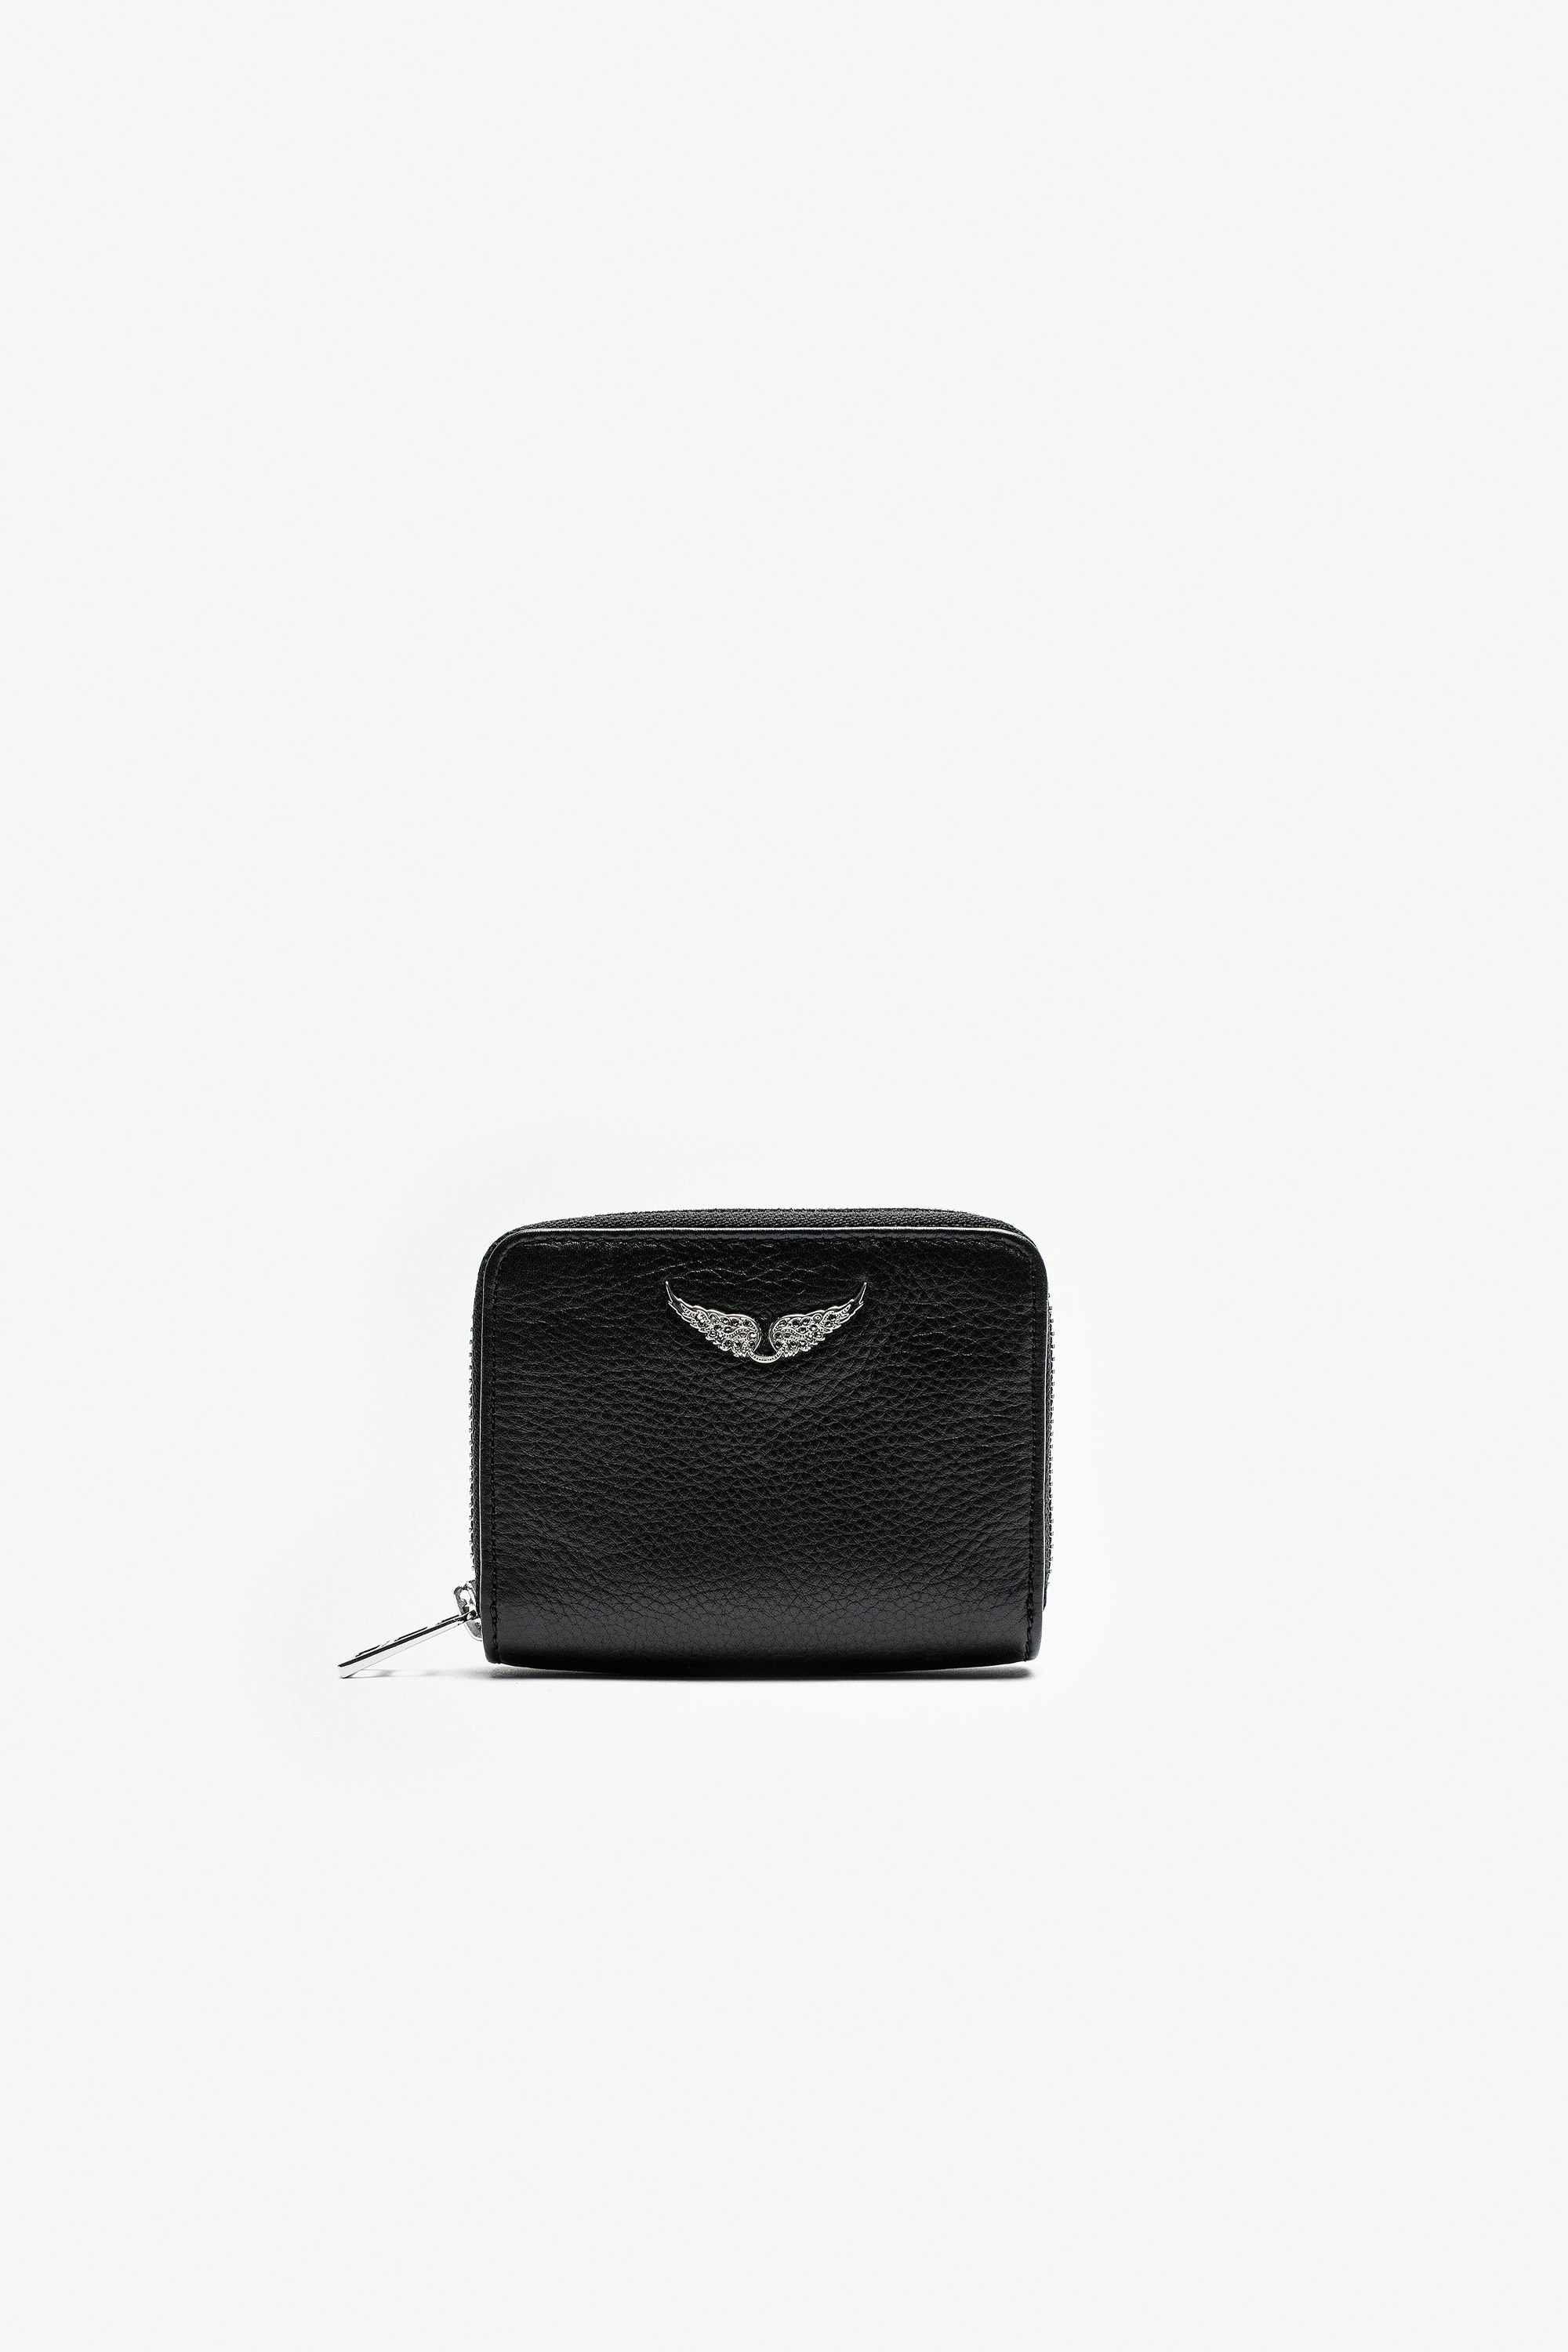 Portemonnaie Mini ZV - Damen-Portemonnaie Mini ZV aus schwarzem Leder.